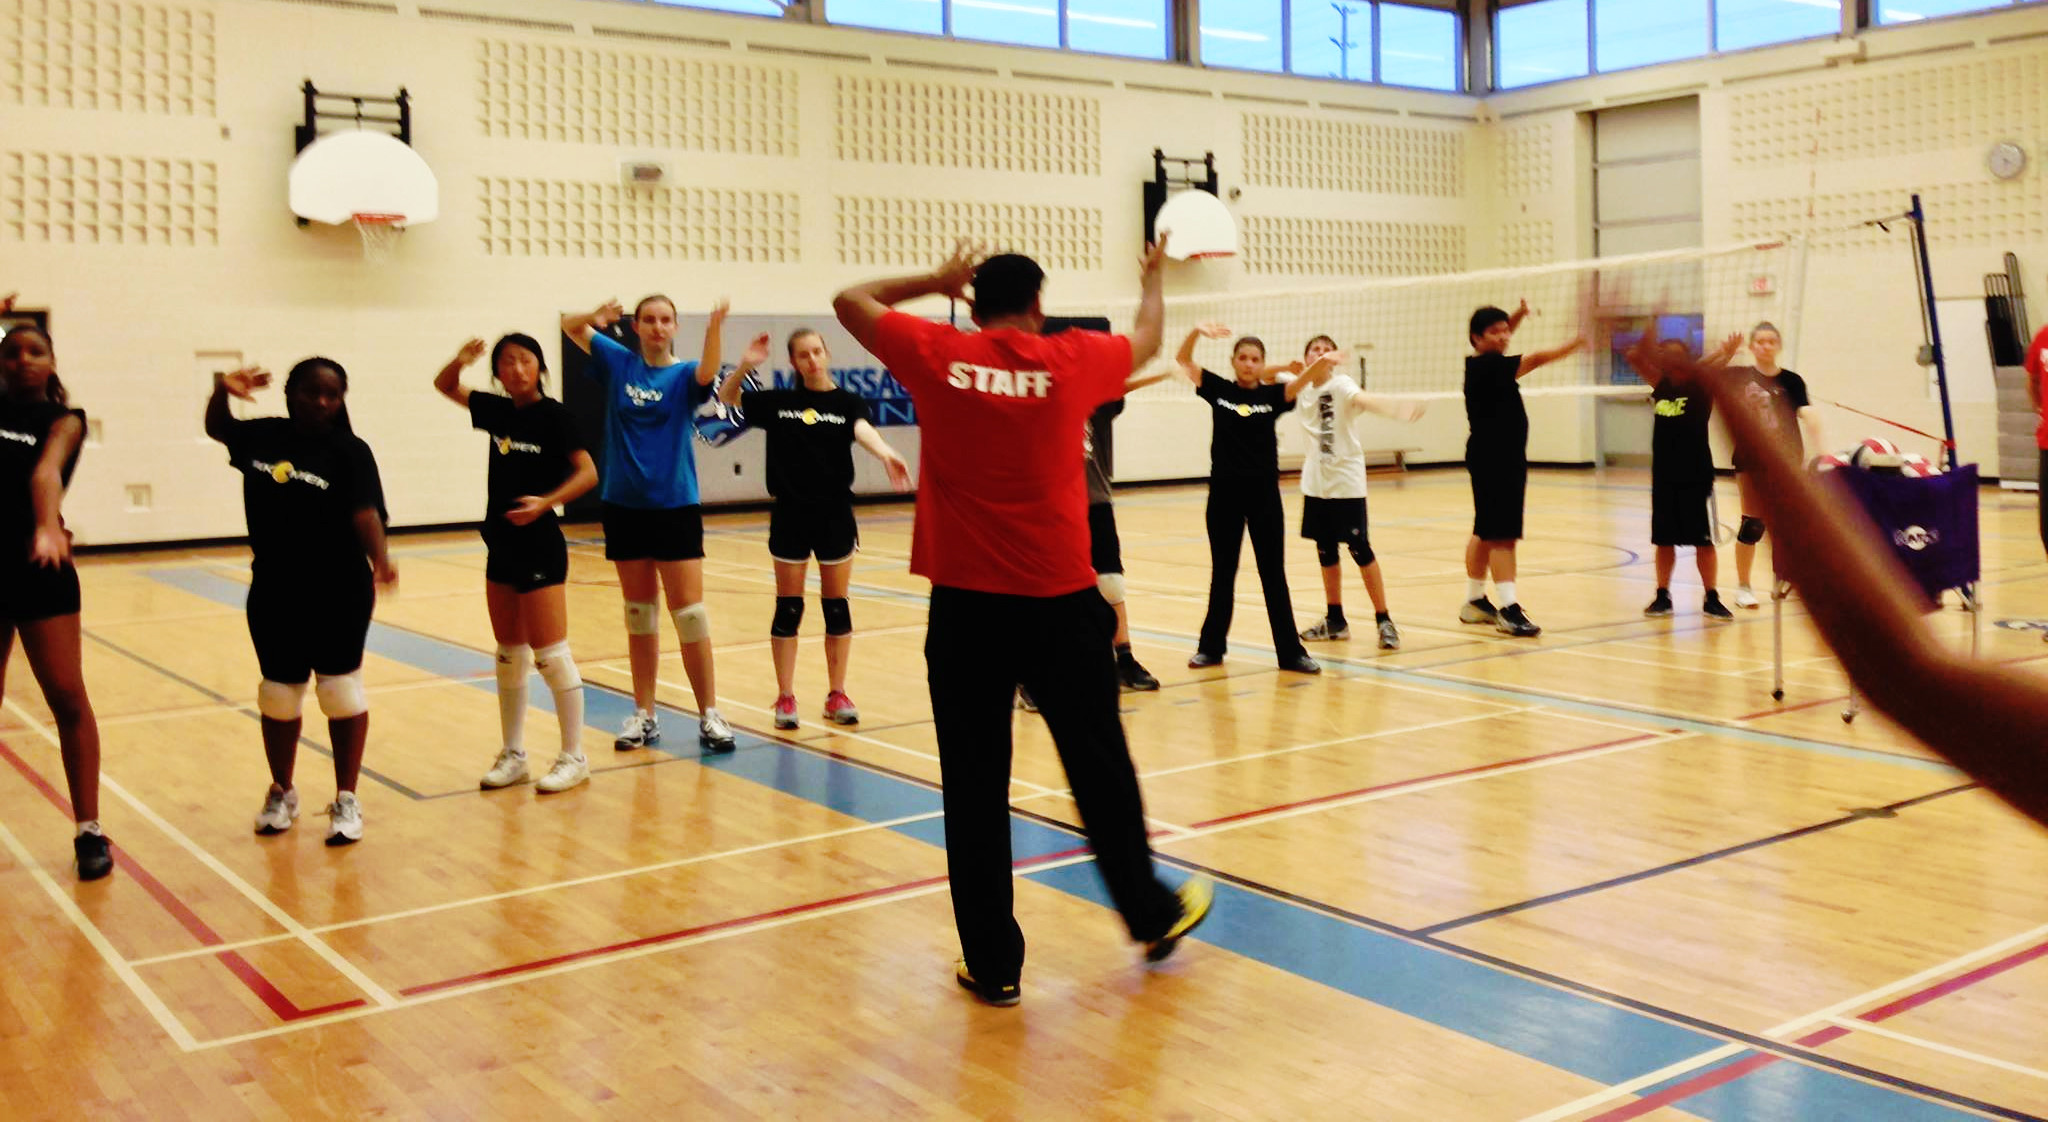 Pakmen Volleyball training exercises